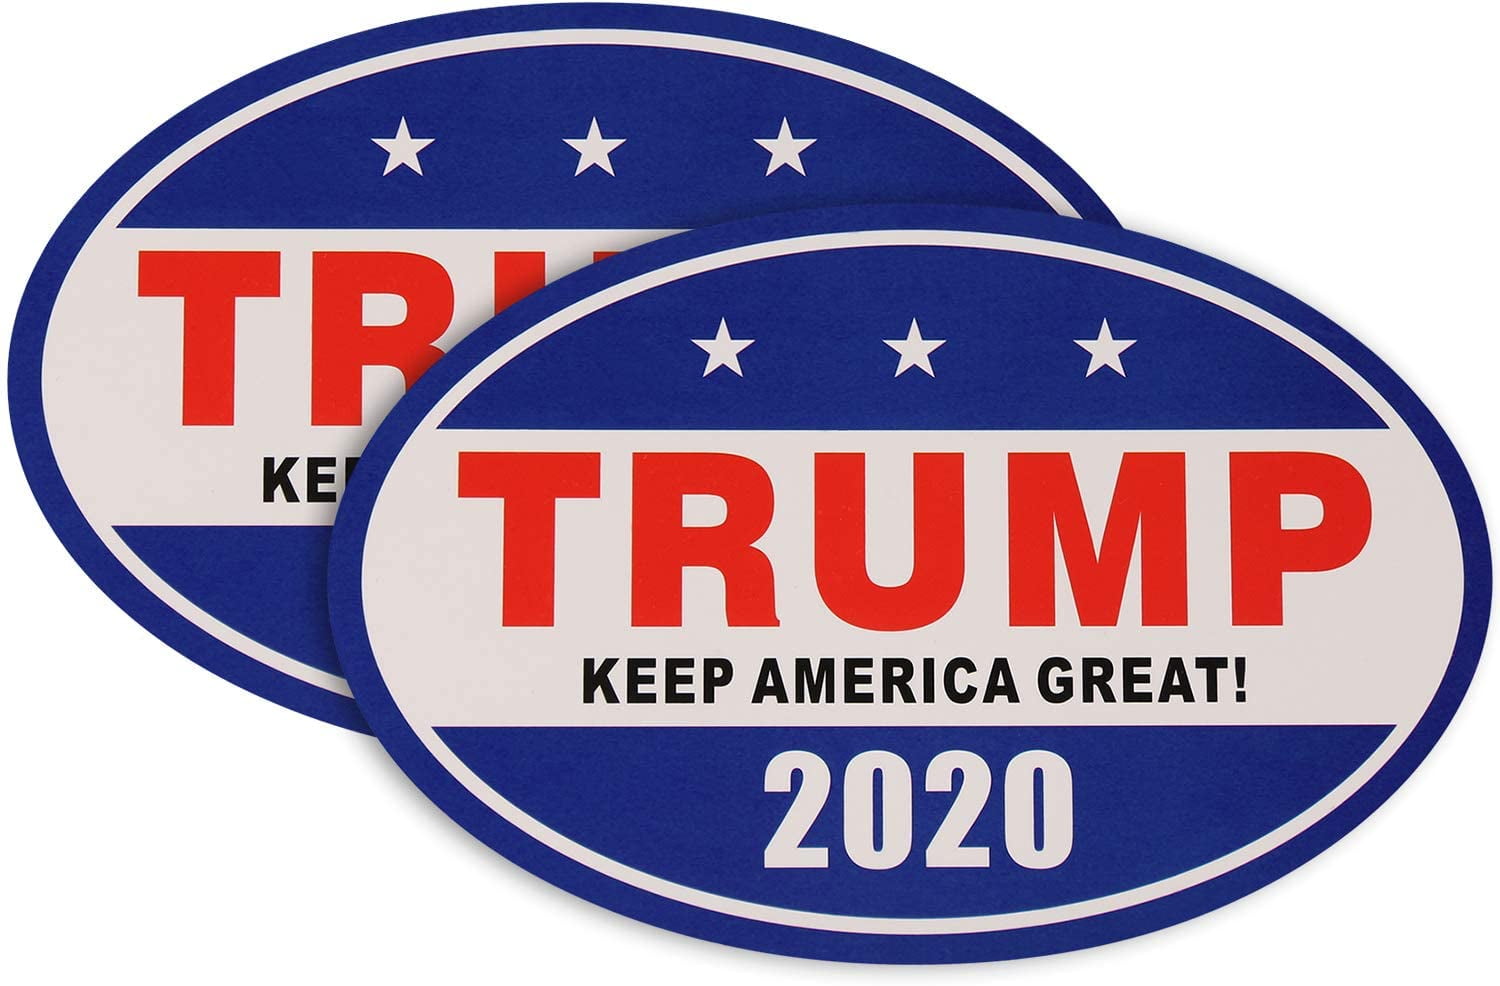 Trump 2020 Decal Oval Vinyl Bumper Sticker Make Keep America Great Again Decal 